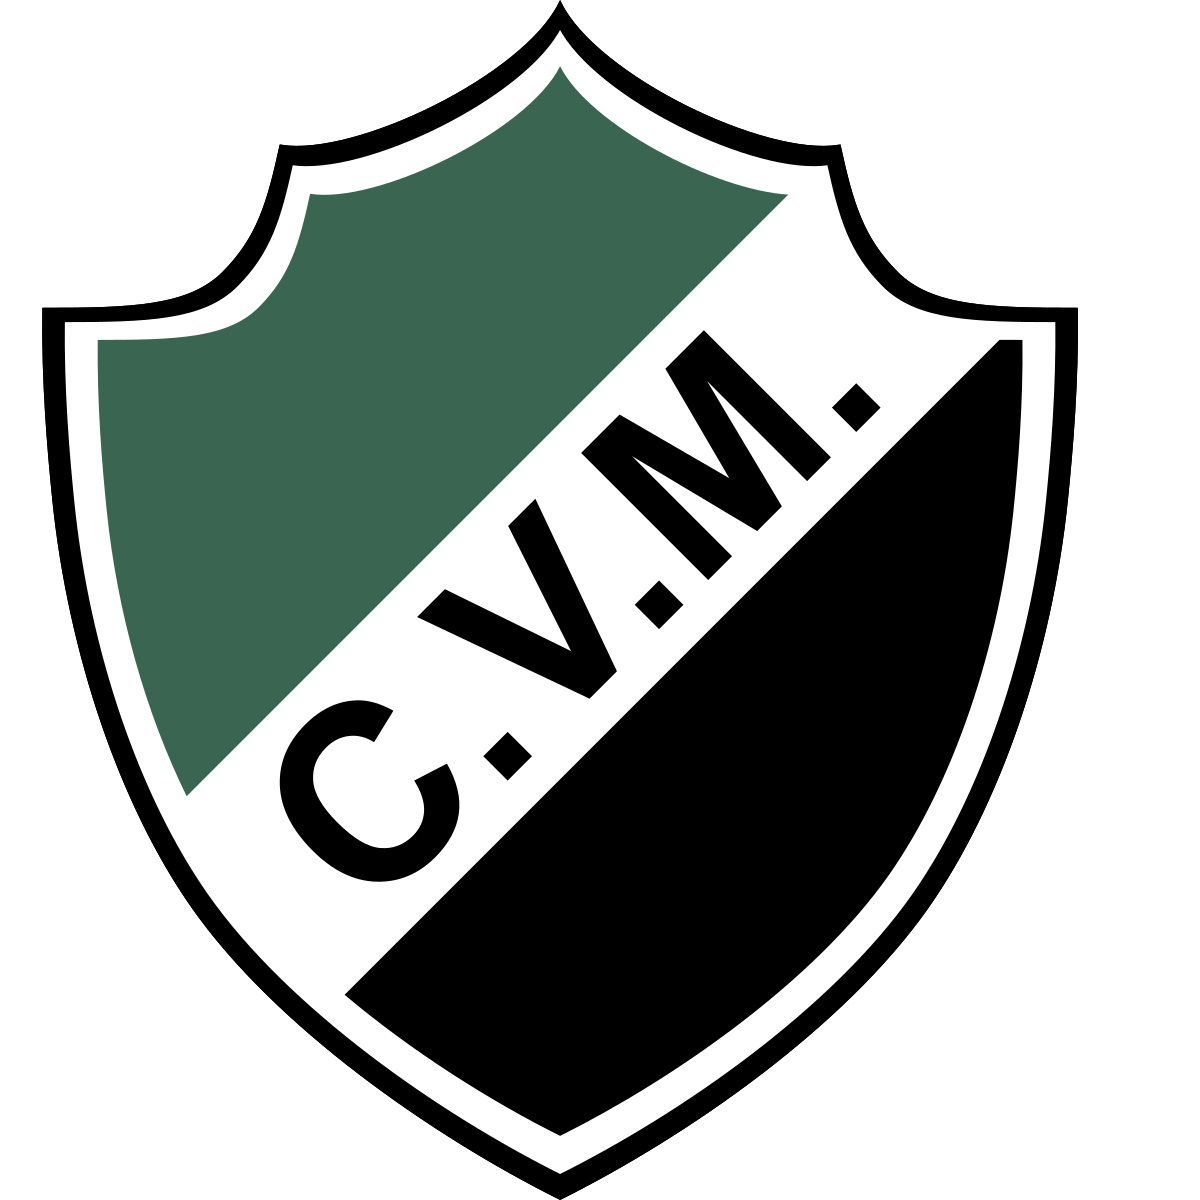 Villa Mitre logo